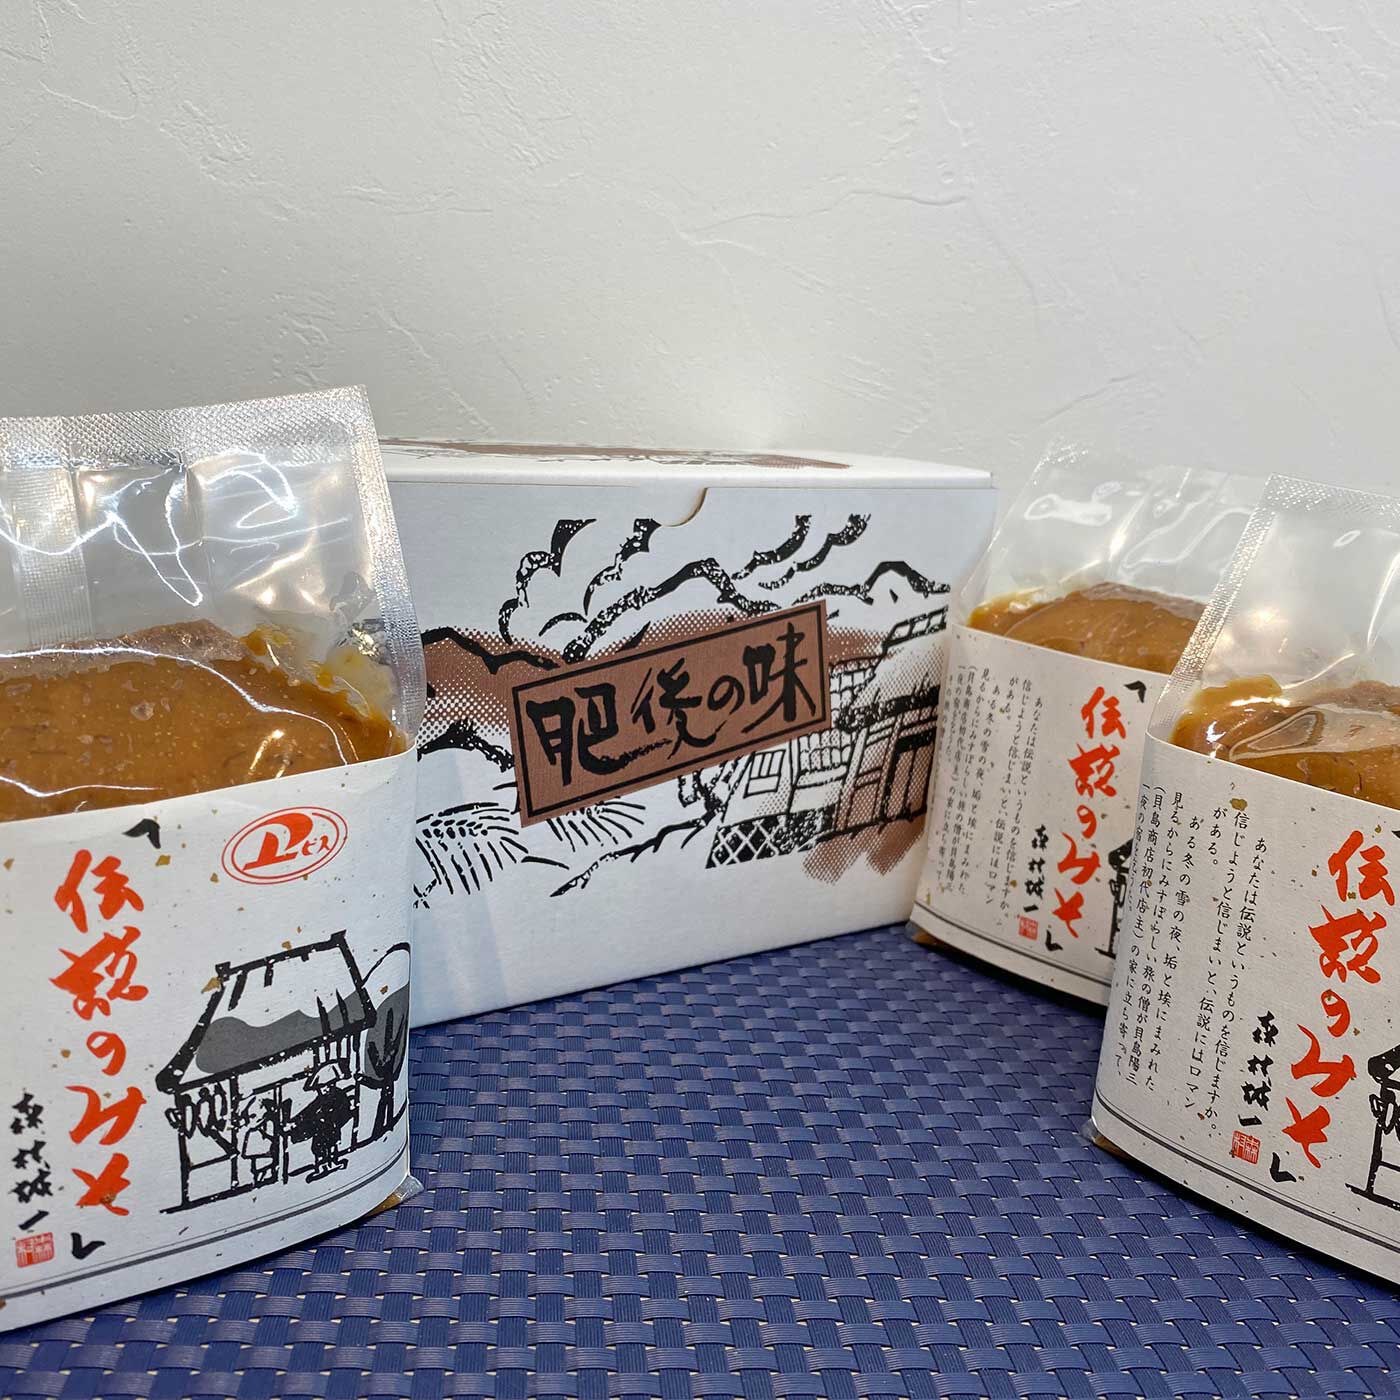 Natucul Chou Club(ナチュカル・シュークラブ)|熊本貝島商店の麦みそ|お届けセット